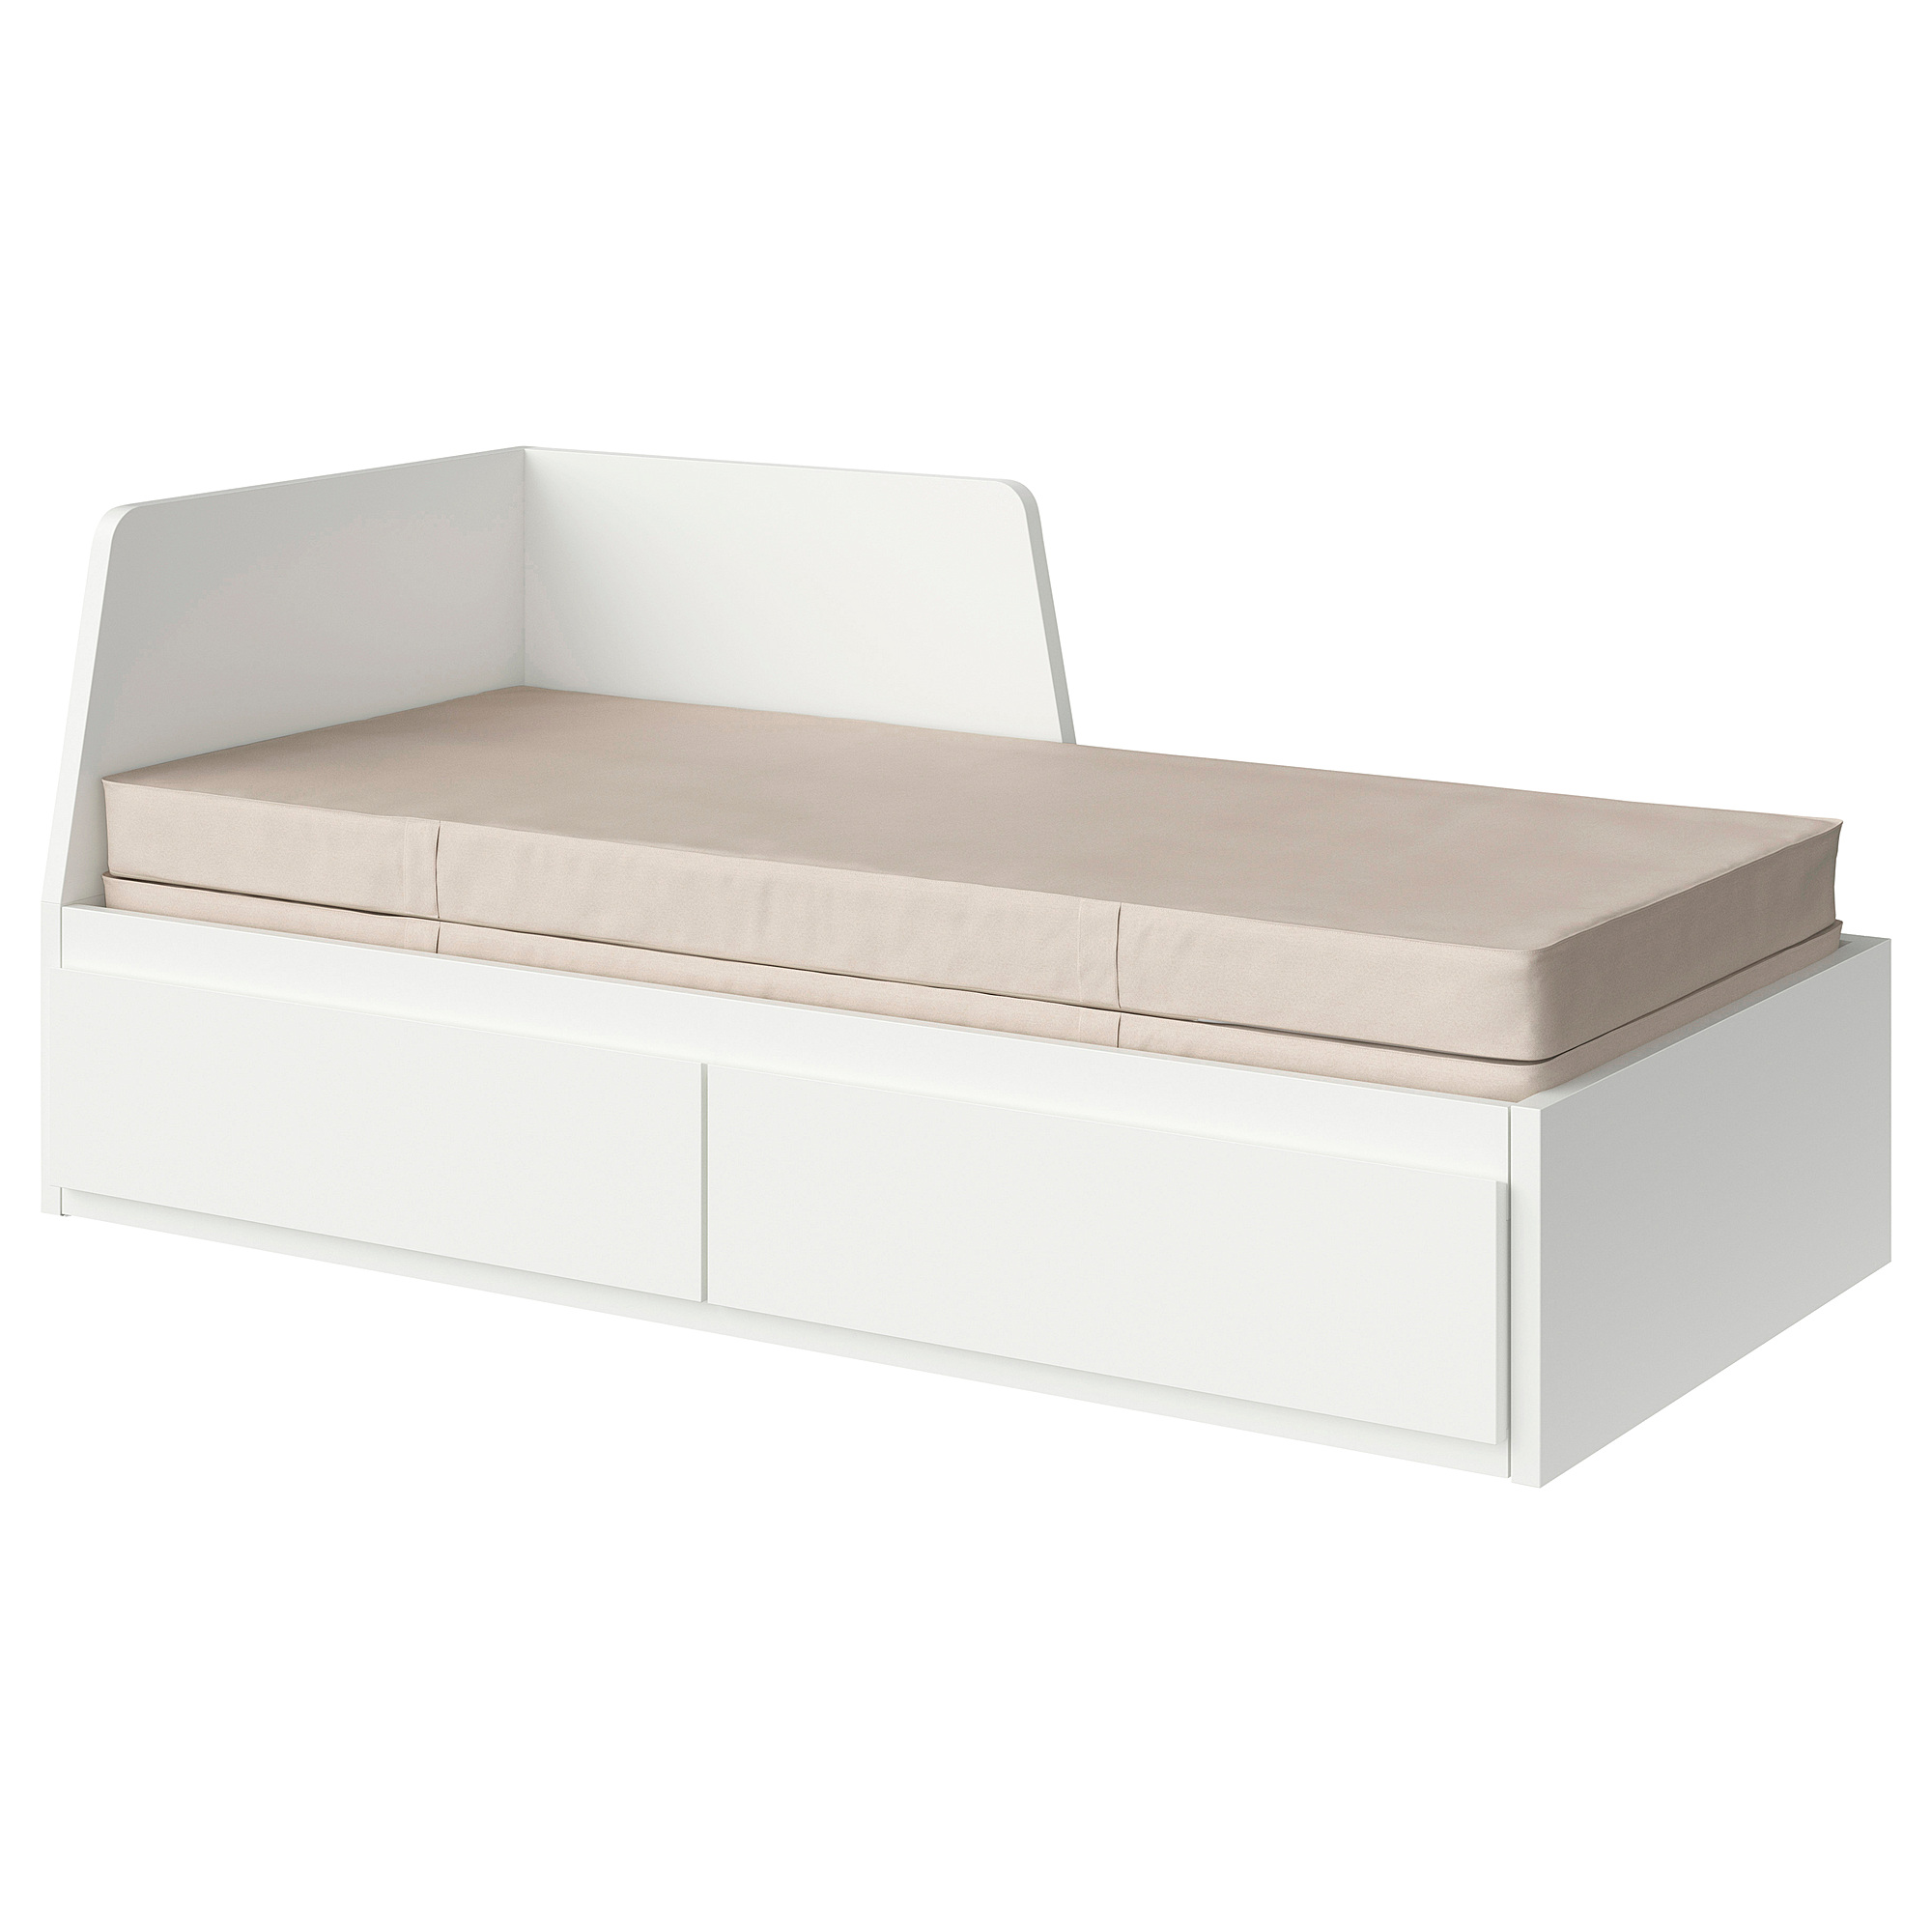 FLEKKE day-bed w 2 drawers/2 mattresses